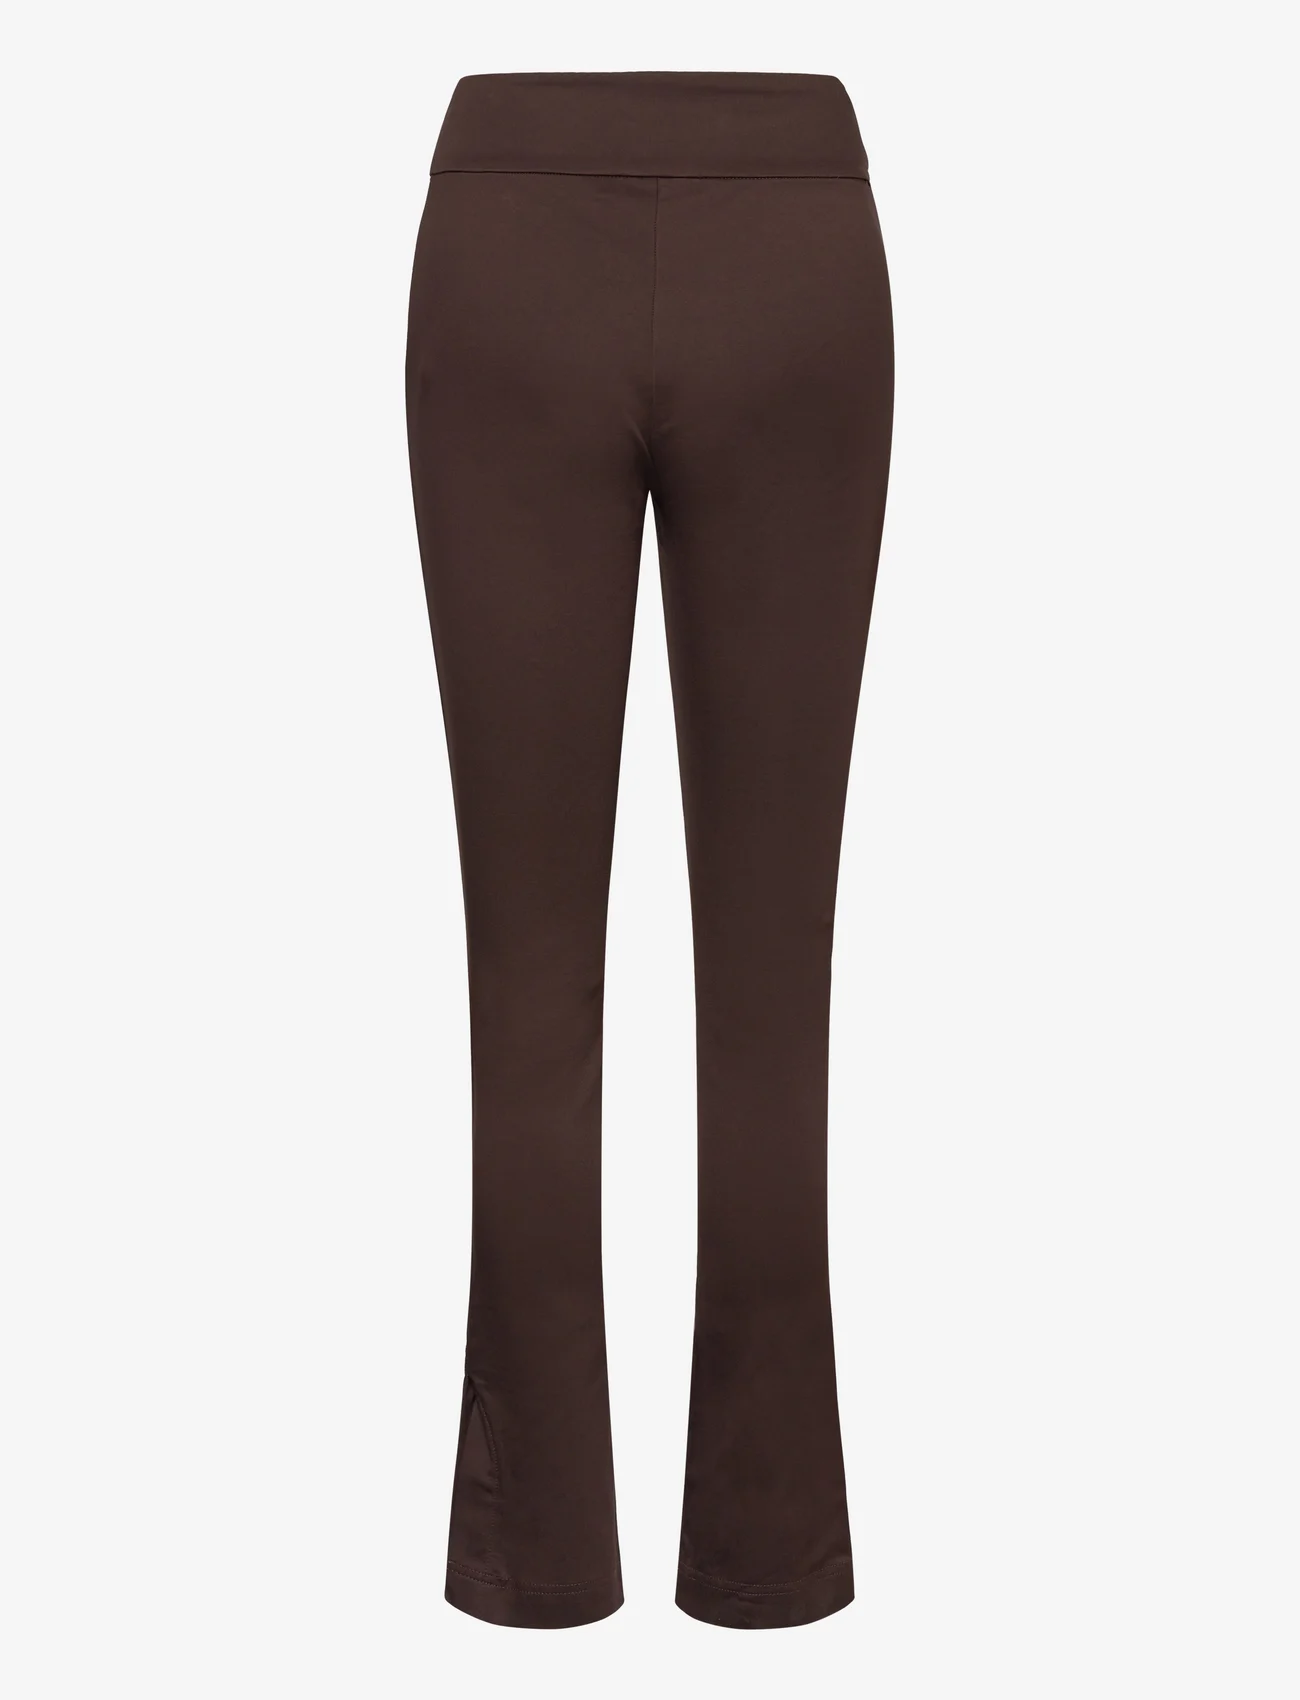 Rosemunde - Trousers w/ slit - slim fit-byxor - black brown - 1